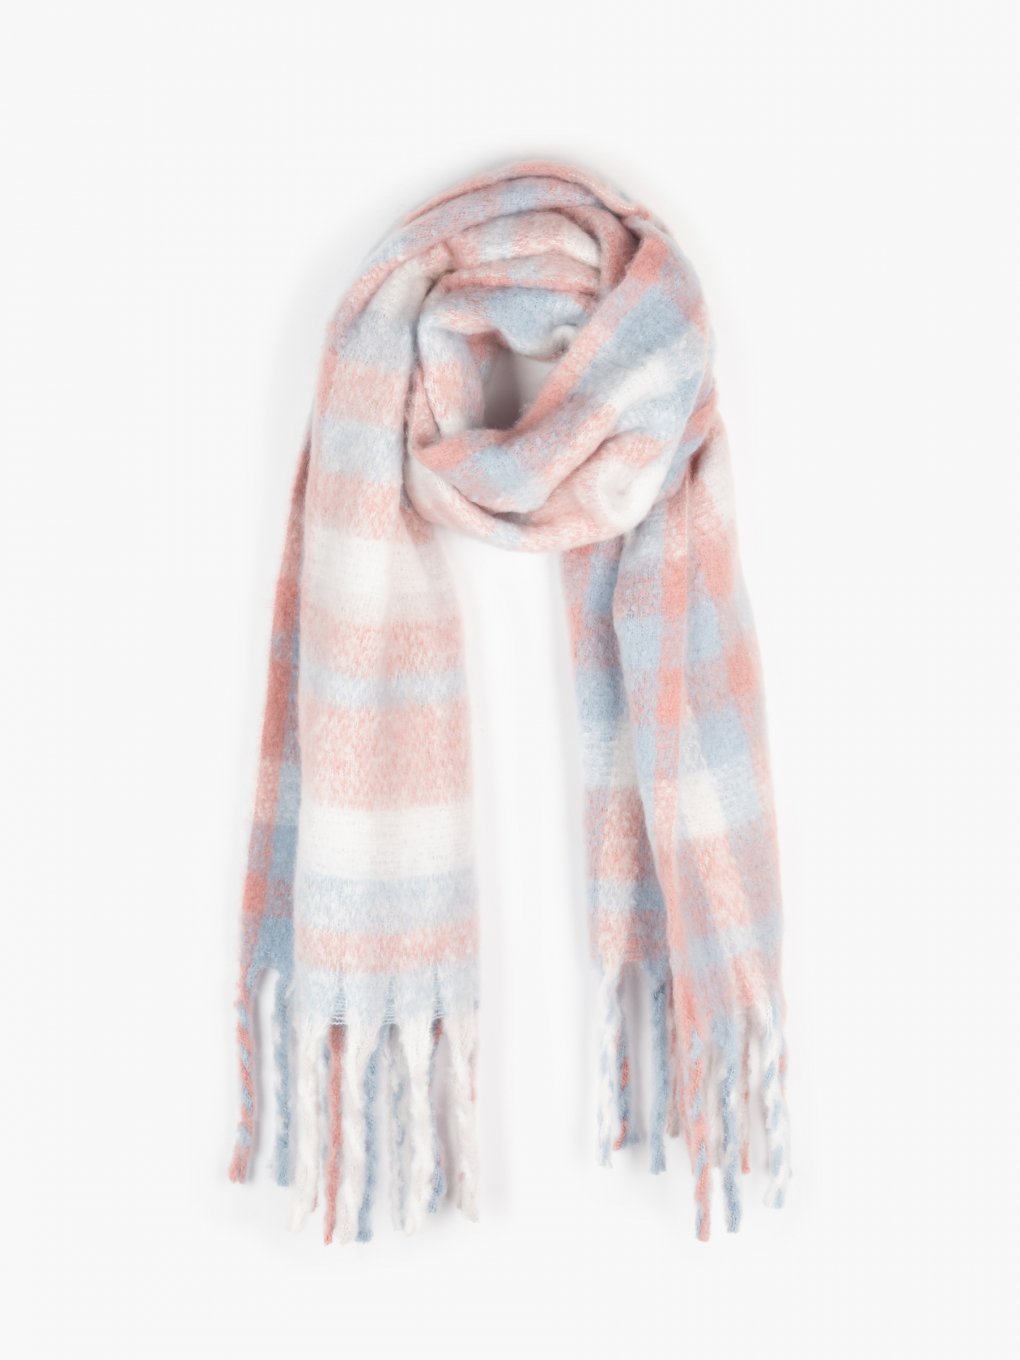 Plaid scarf with tassels